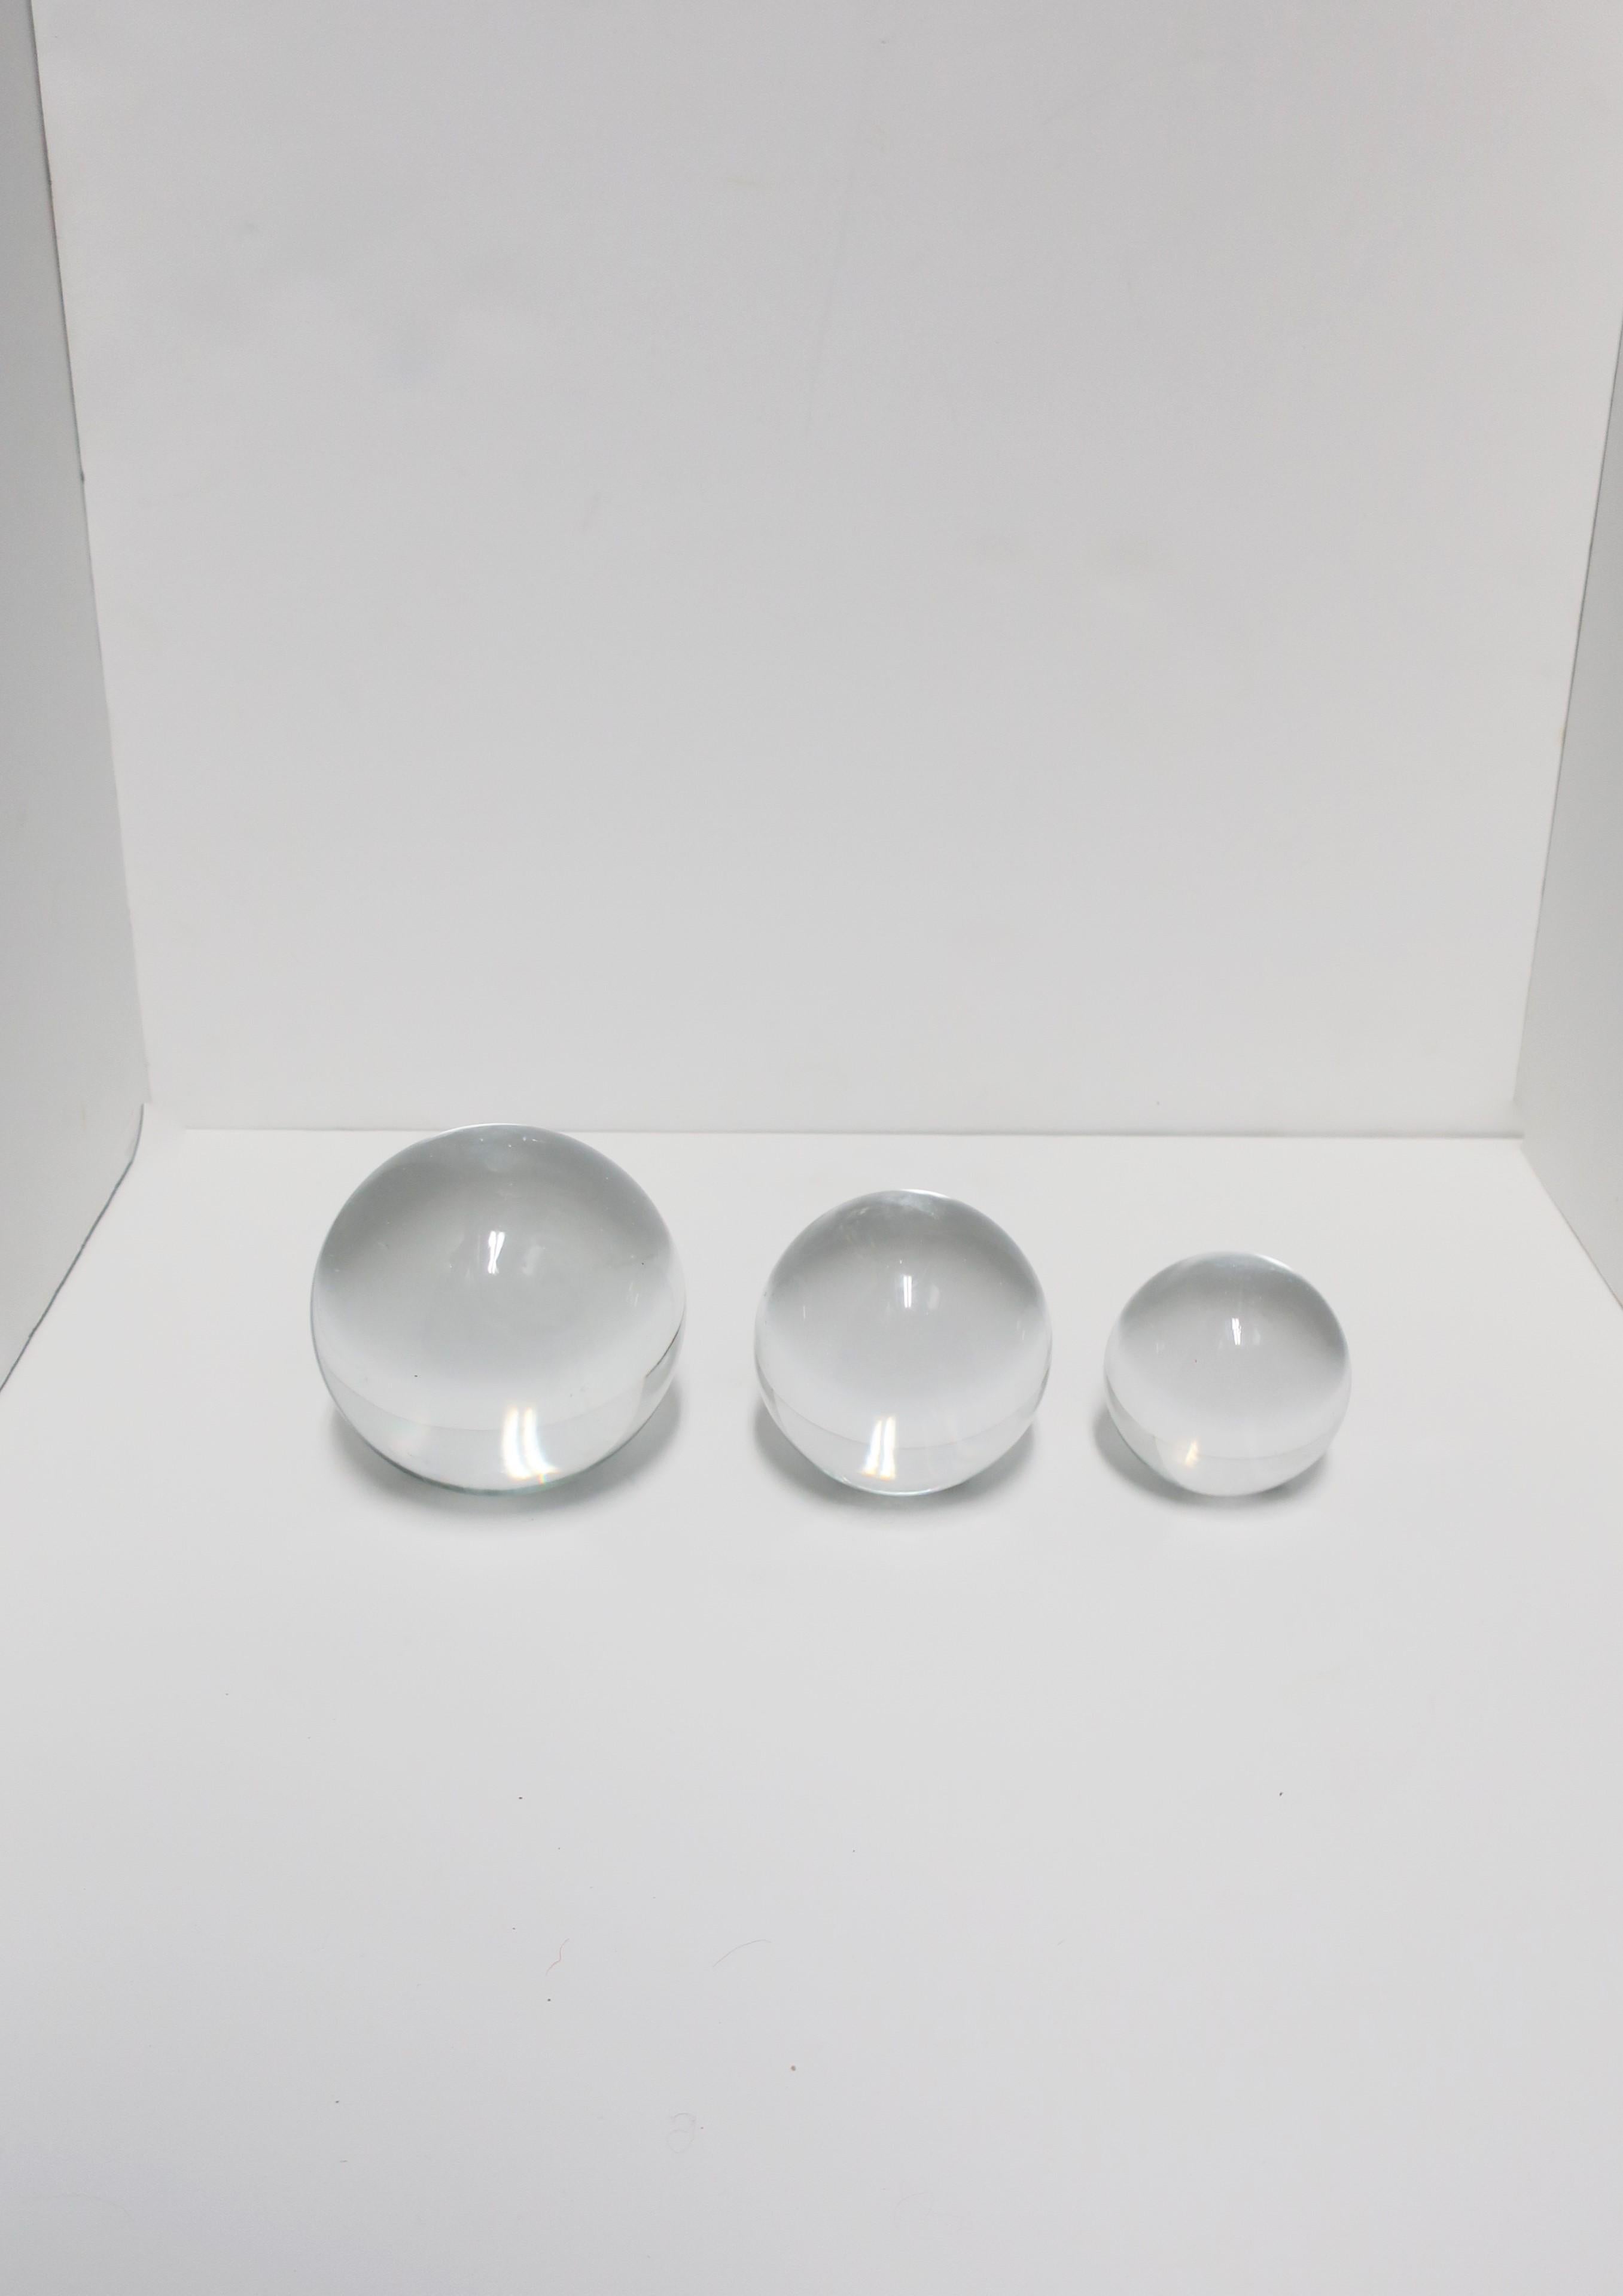 European Crystal Ball Spheres Signed, circa 1980s New York, Set of 3